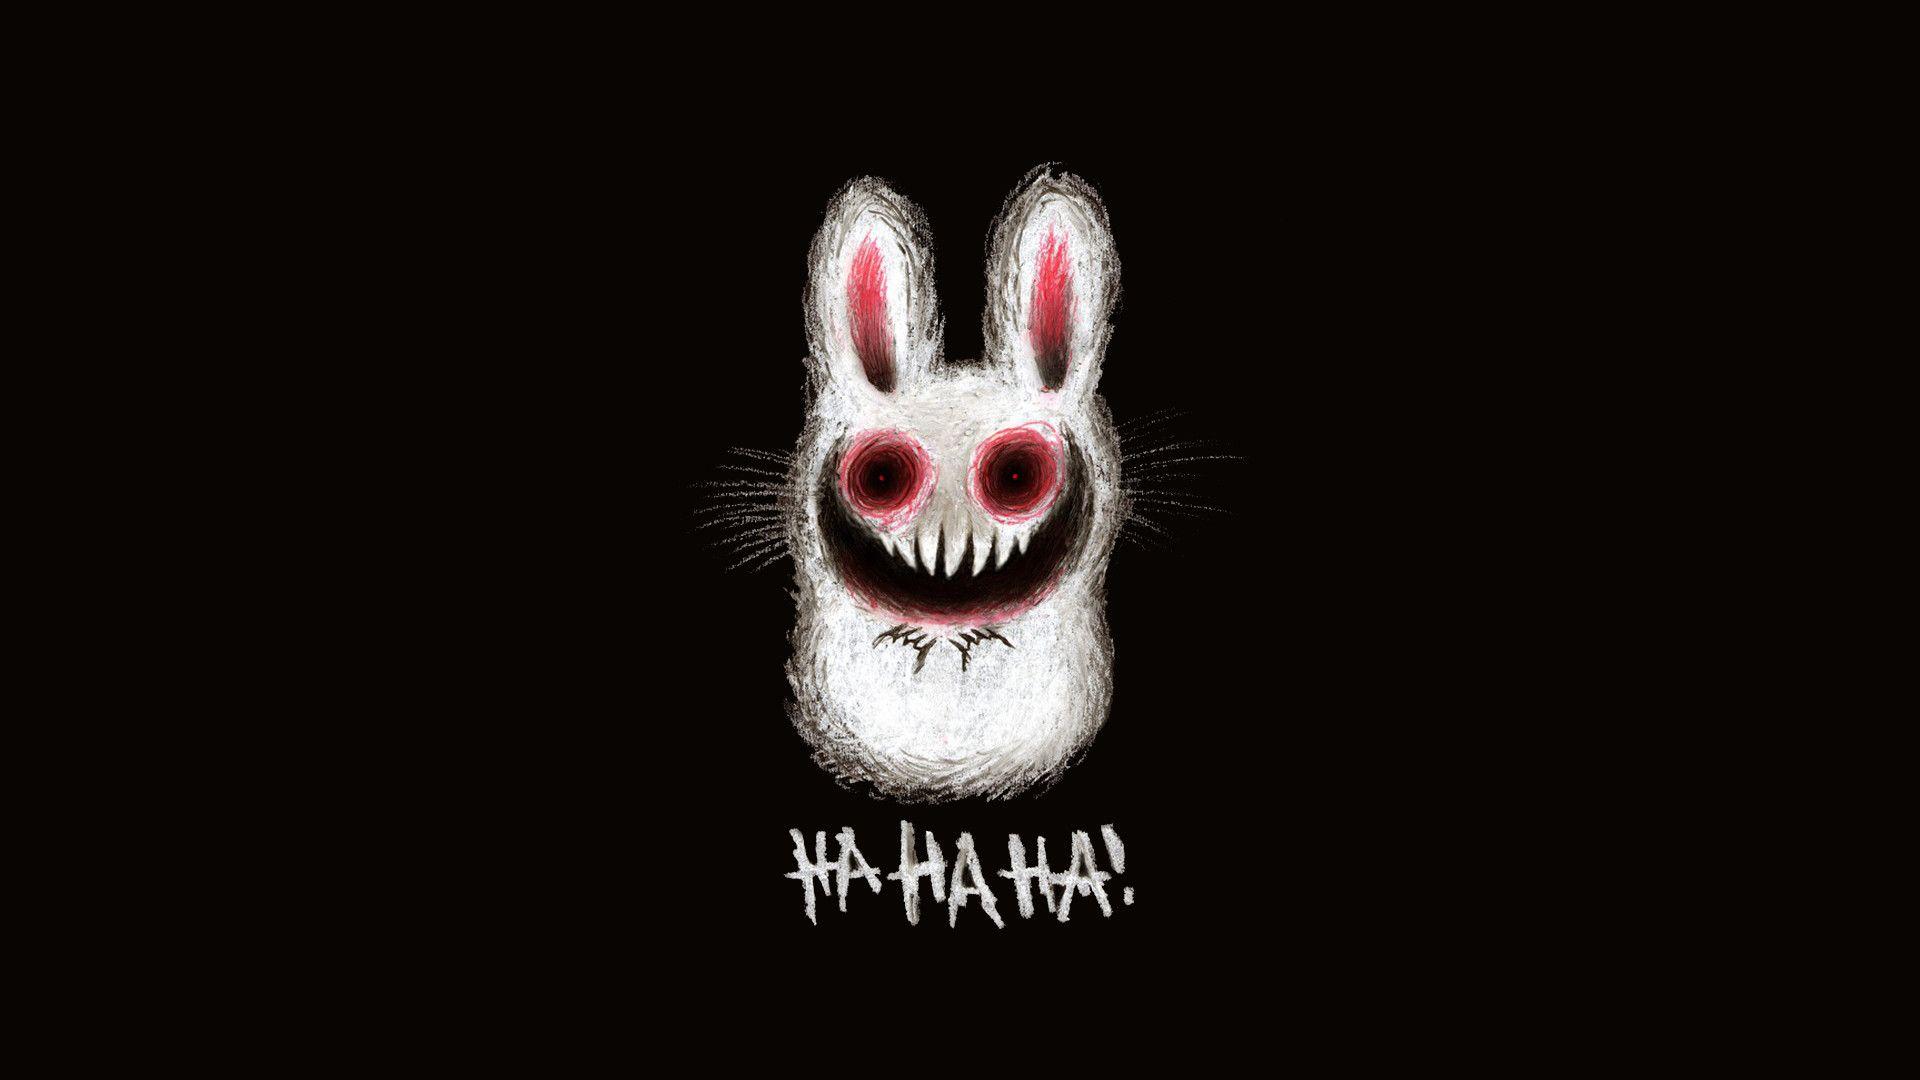 Creepy bunny wallpaper, cute adorable fluffy scary bunny rabbit. Creepy background, Scary wallpaper, Rabbit wallpaper